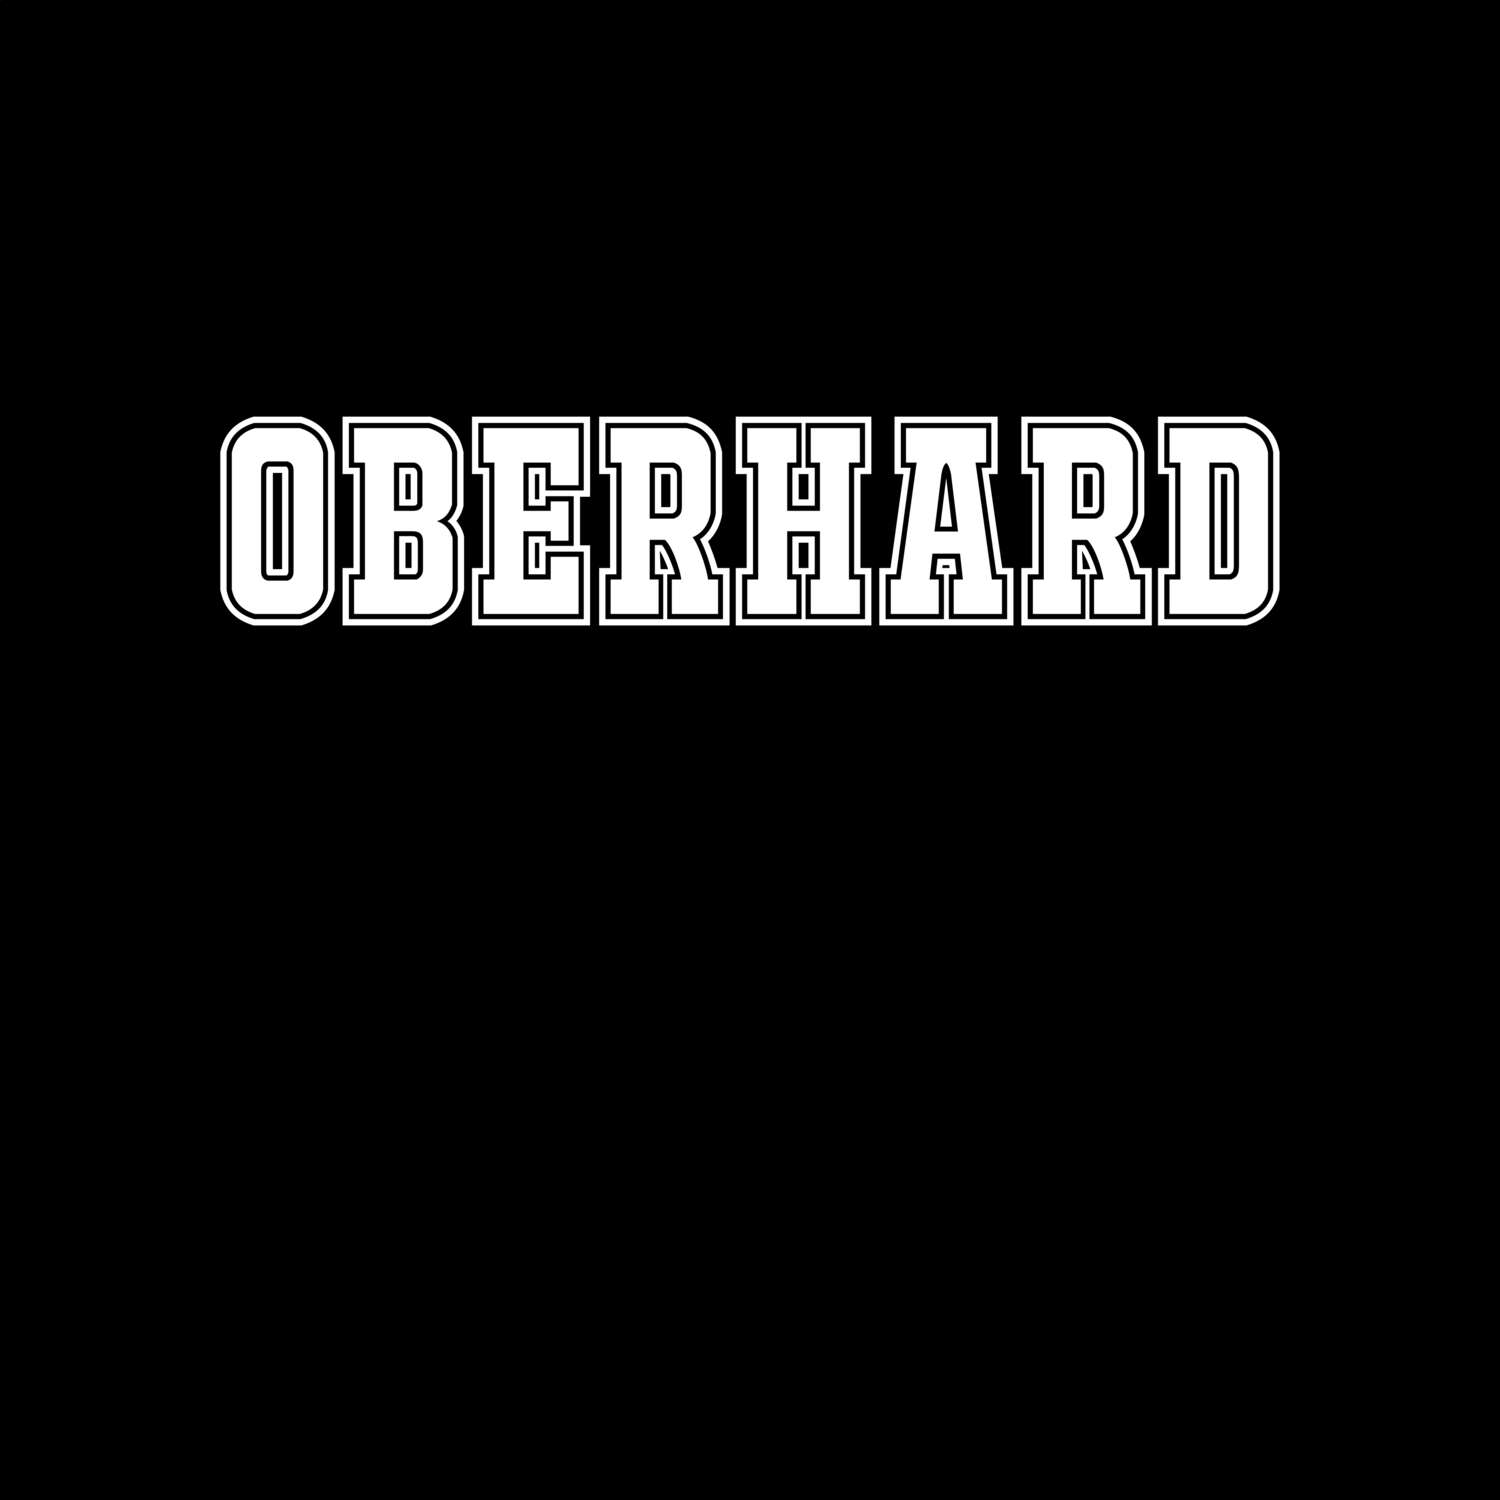 Oberhard T-Shirt »Classic«